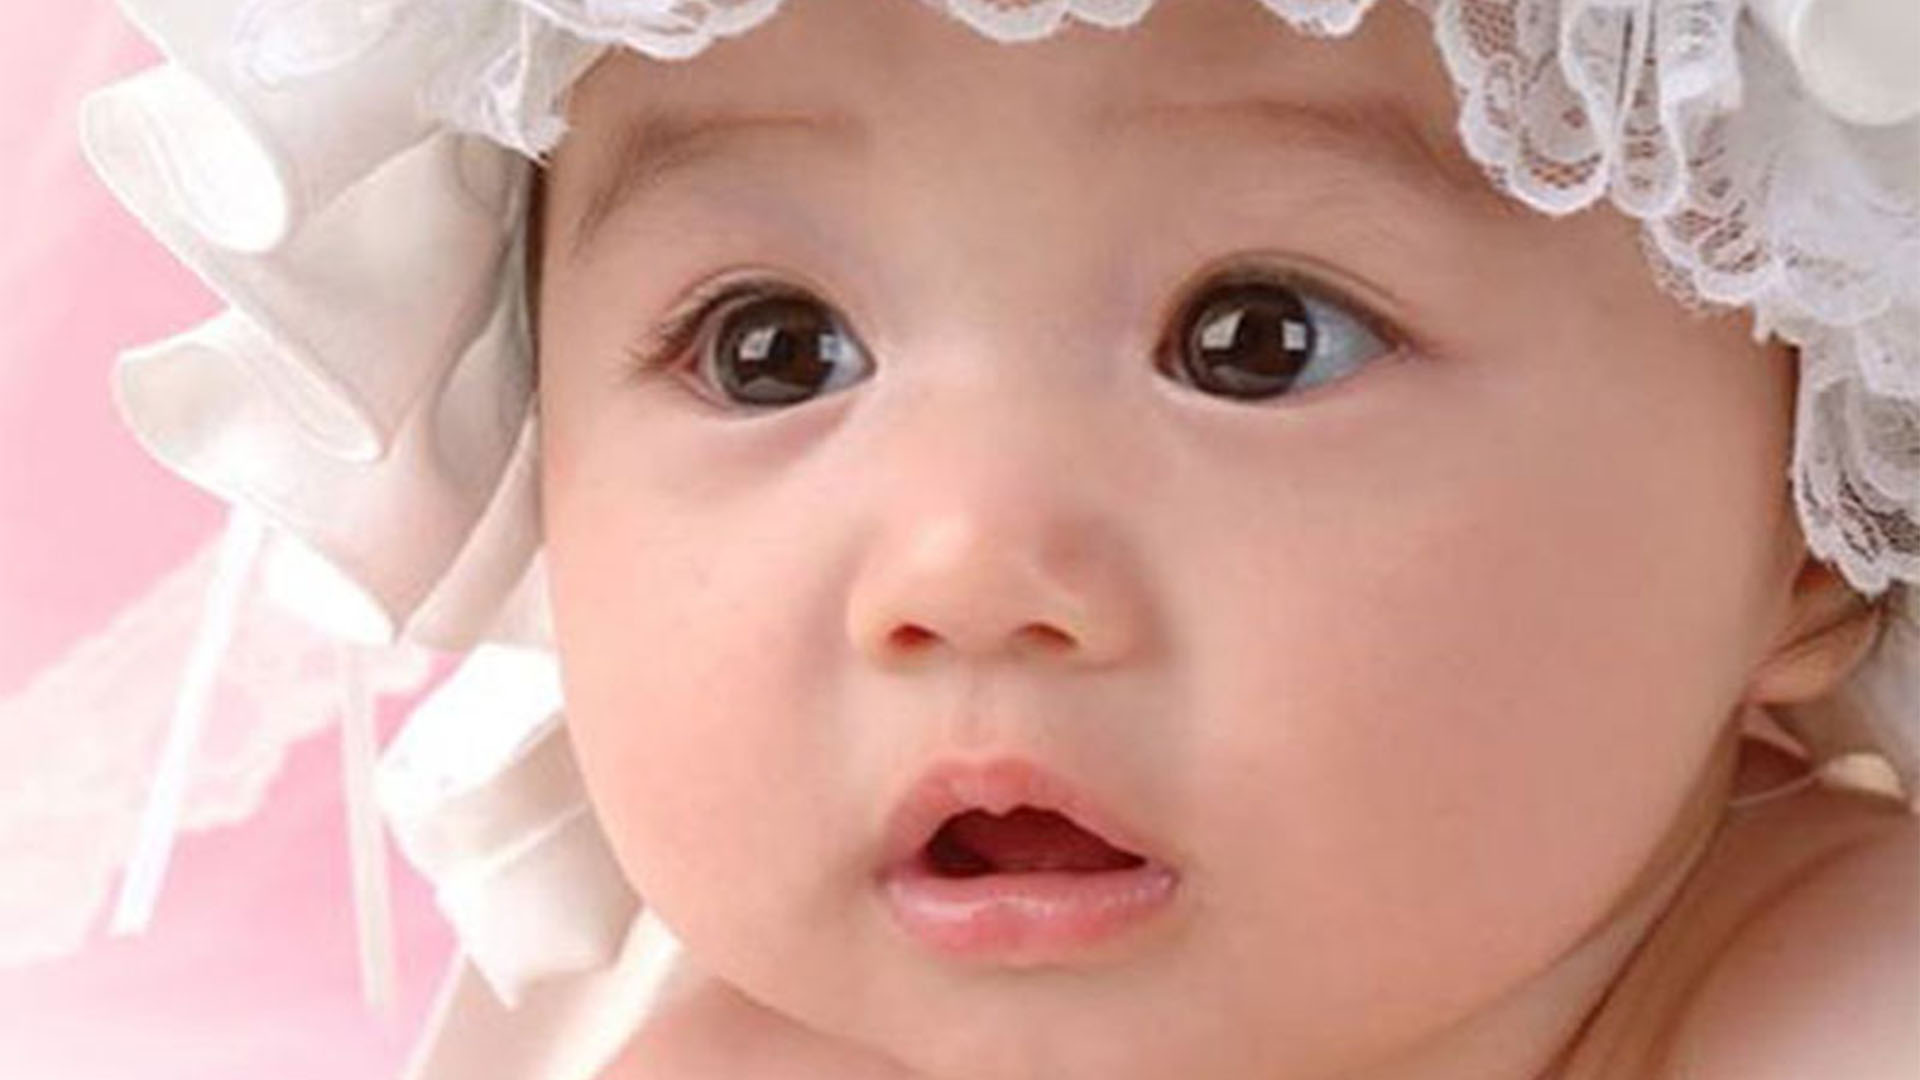 cute baby image